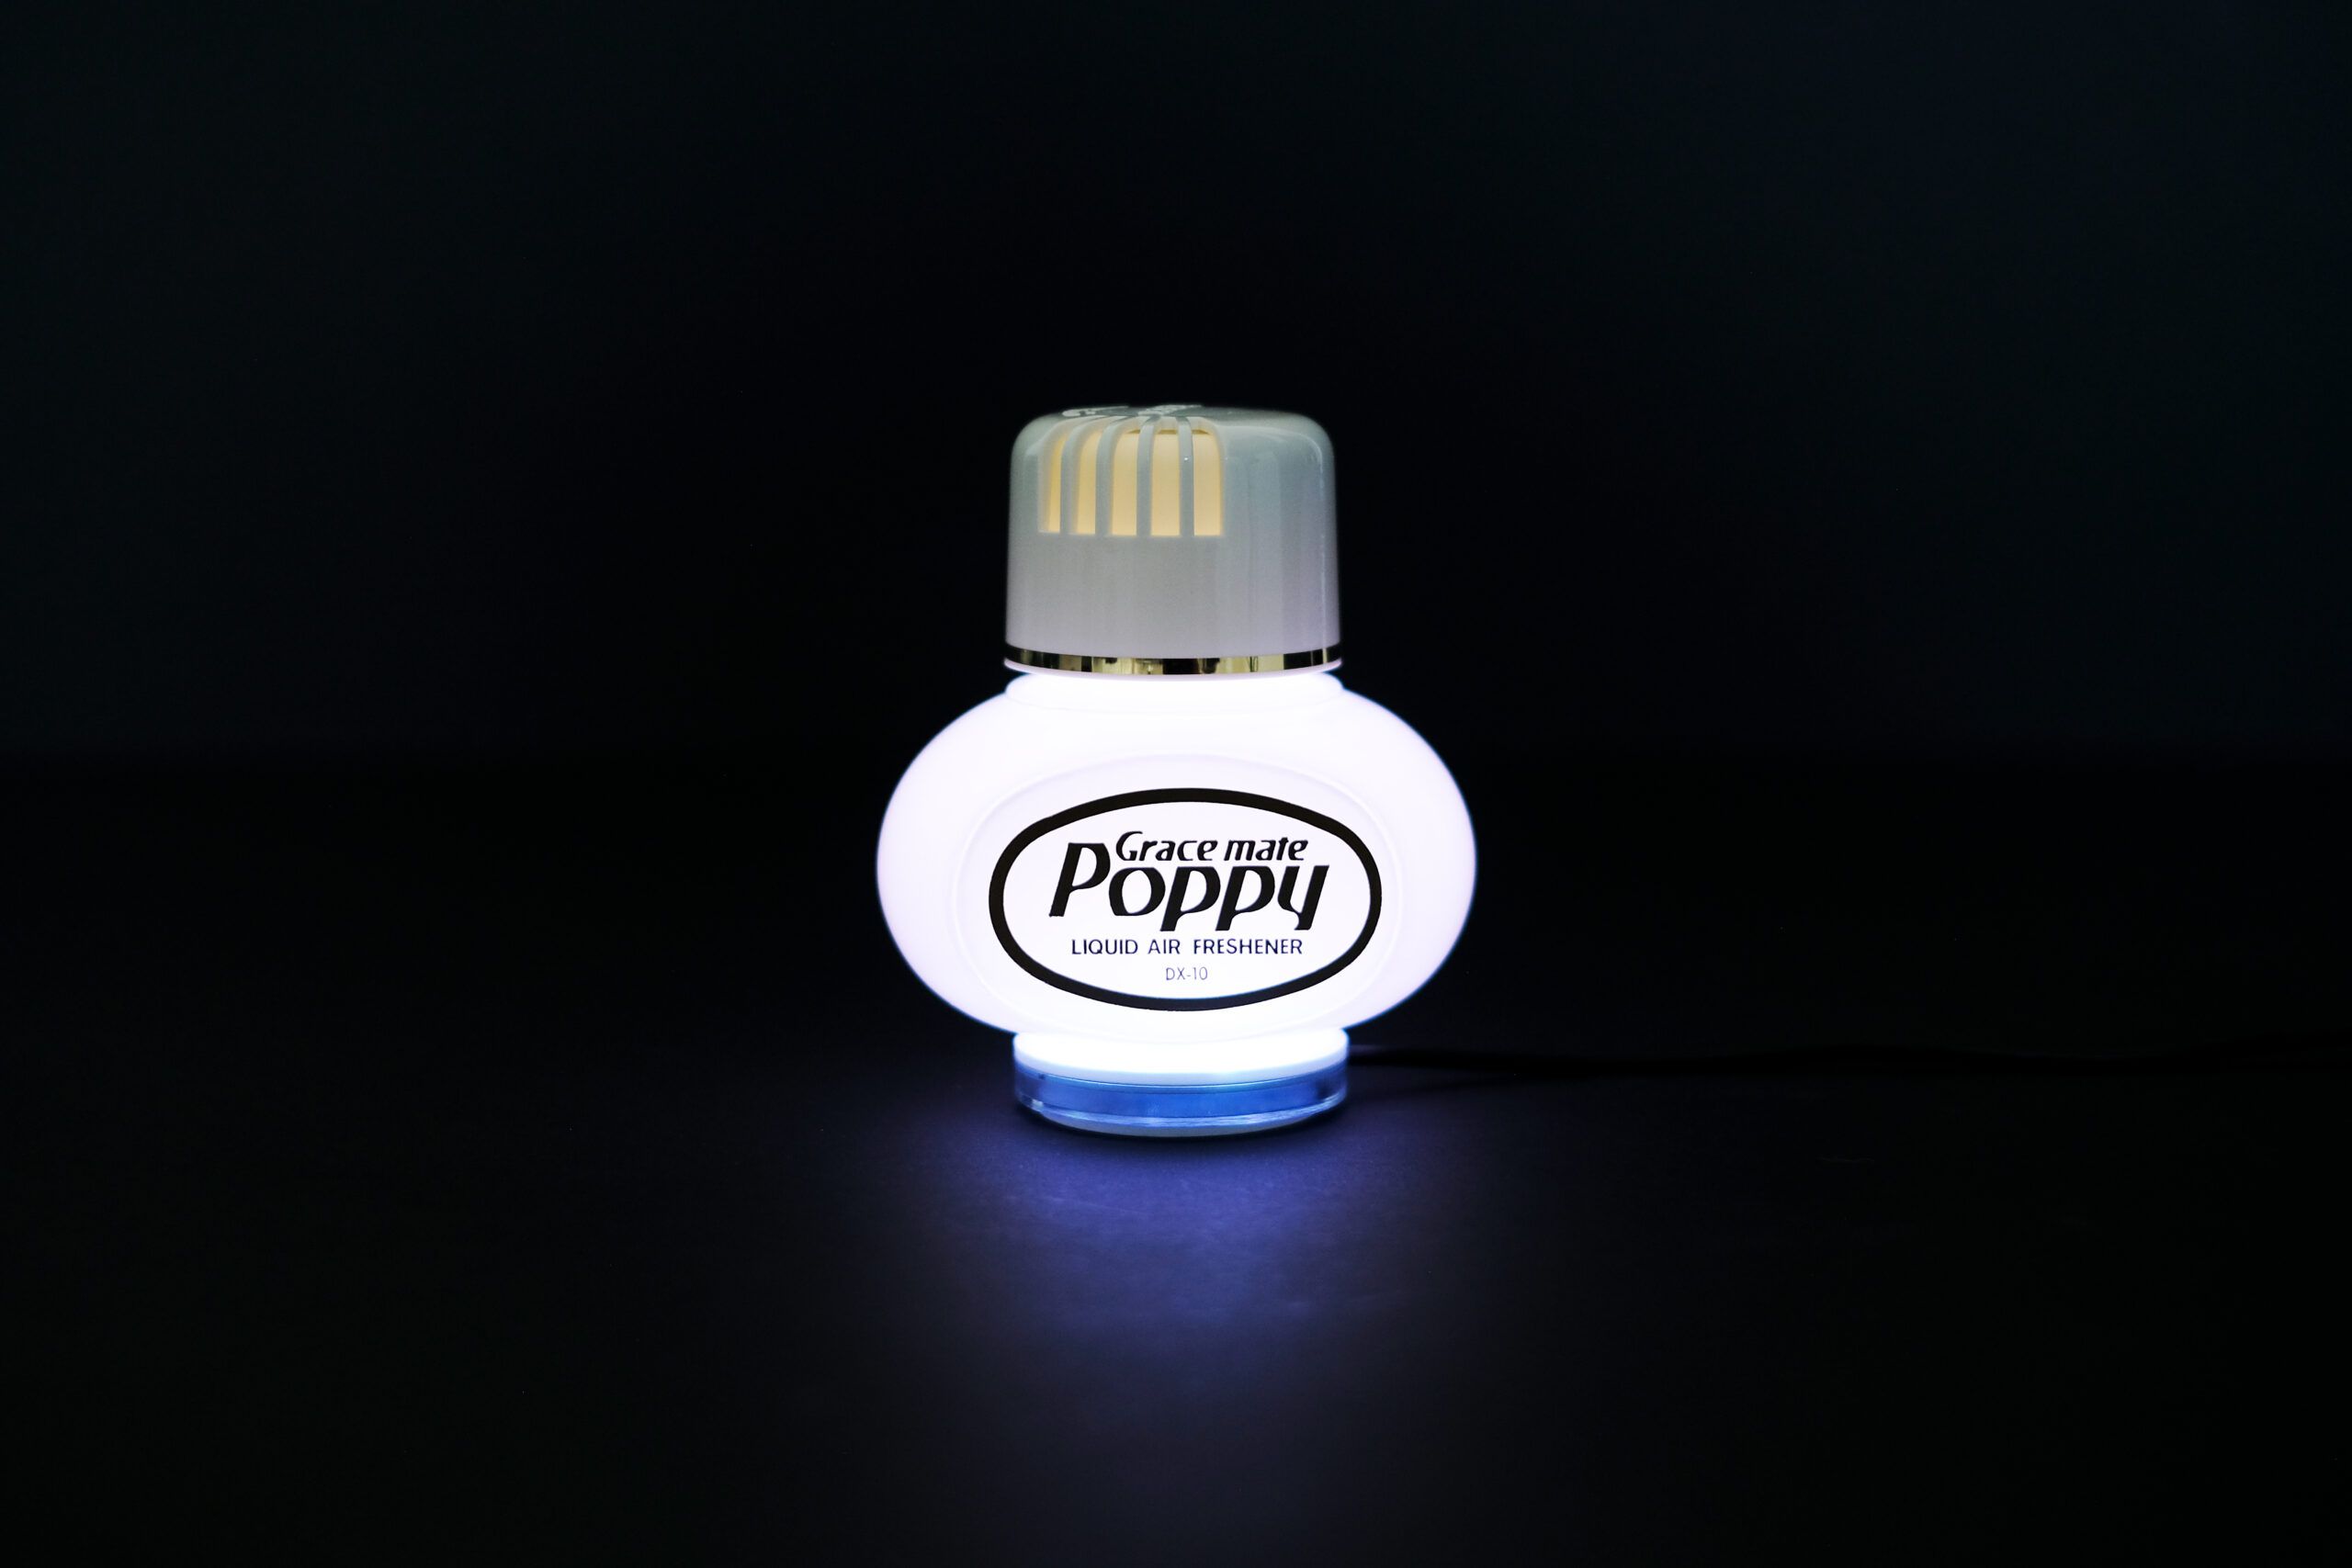 Original Poppy Lufterfrischer Duft Jasmin rote LED Beleuchtung 24V LKW PKW  